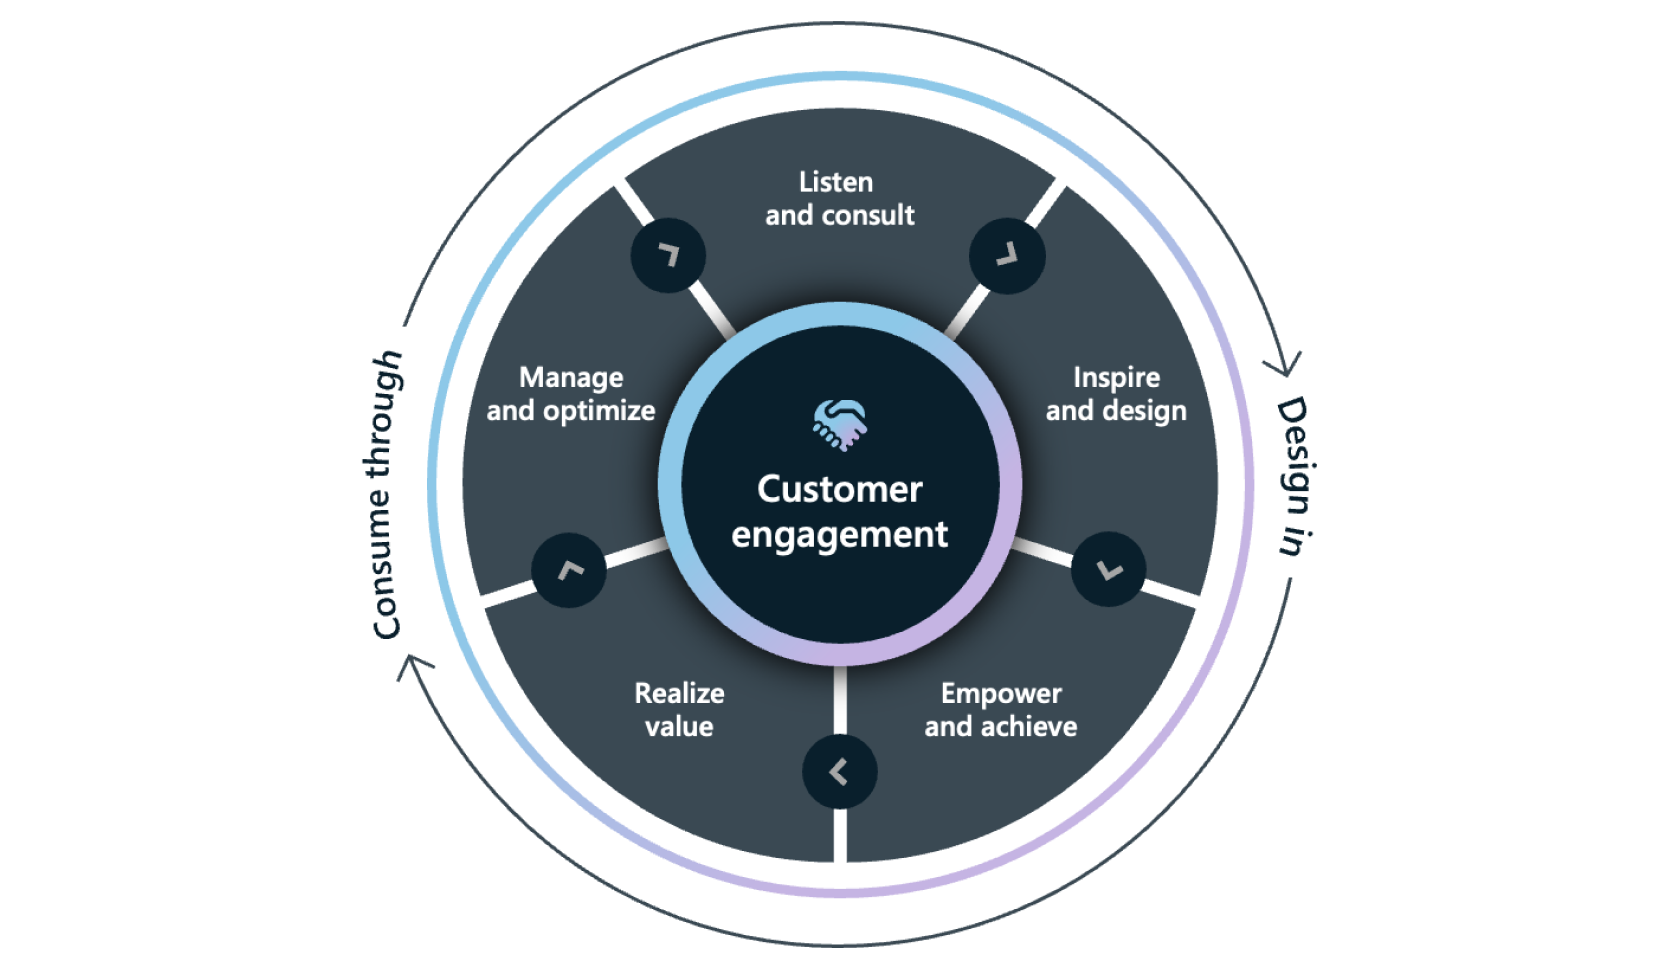 A circular model for the Microsoft Customer Engagement Methodology